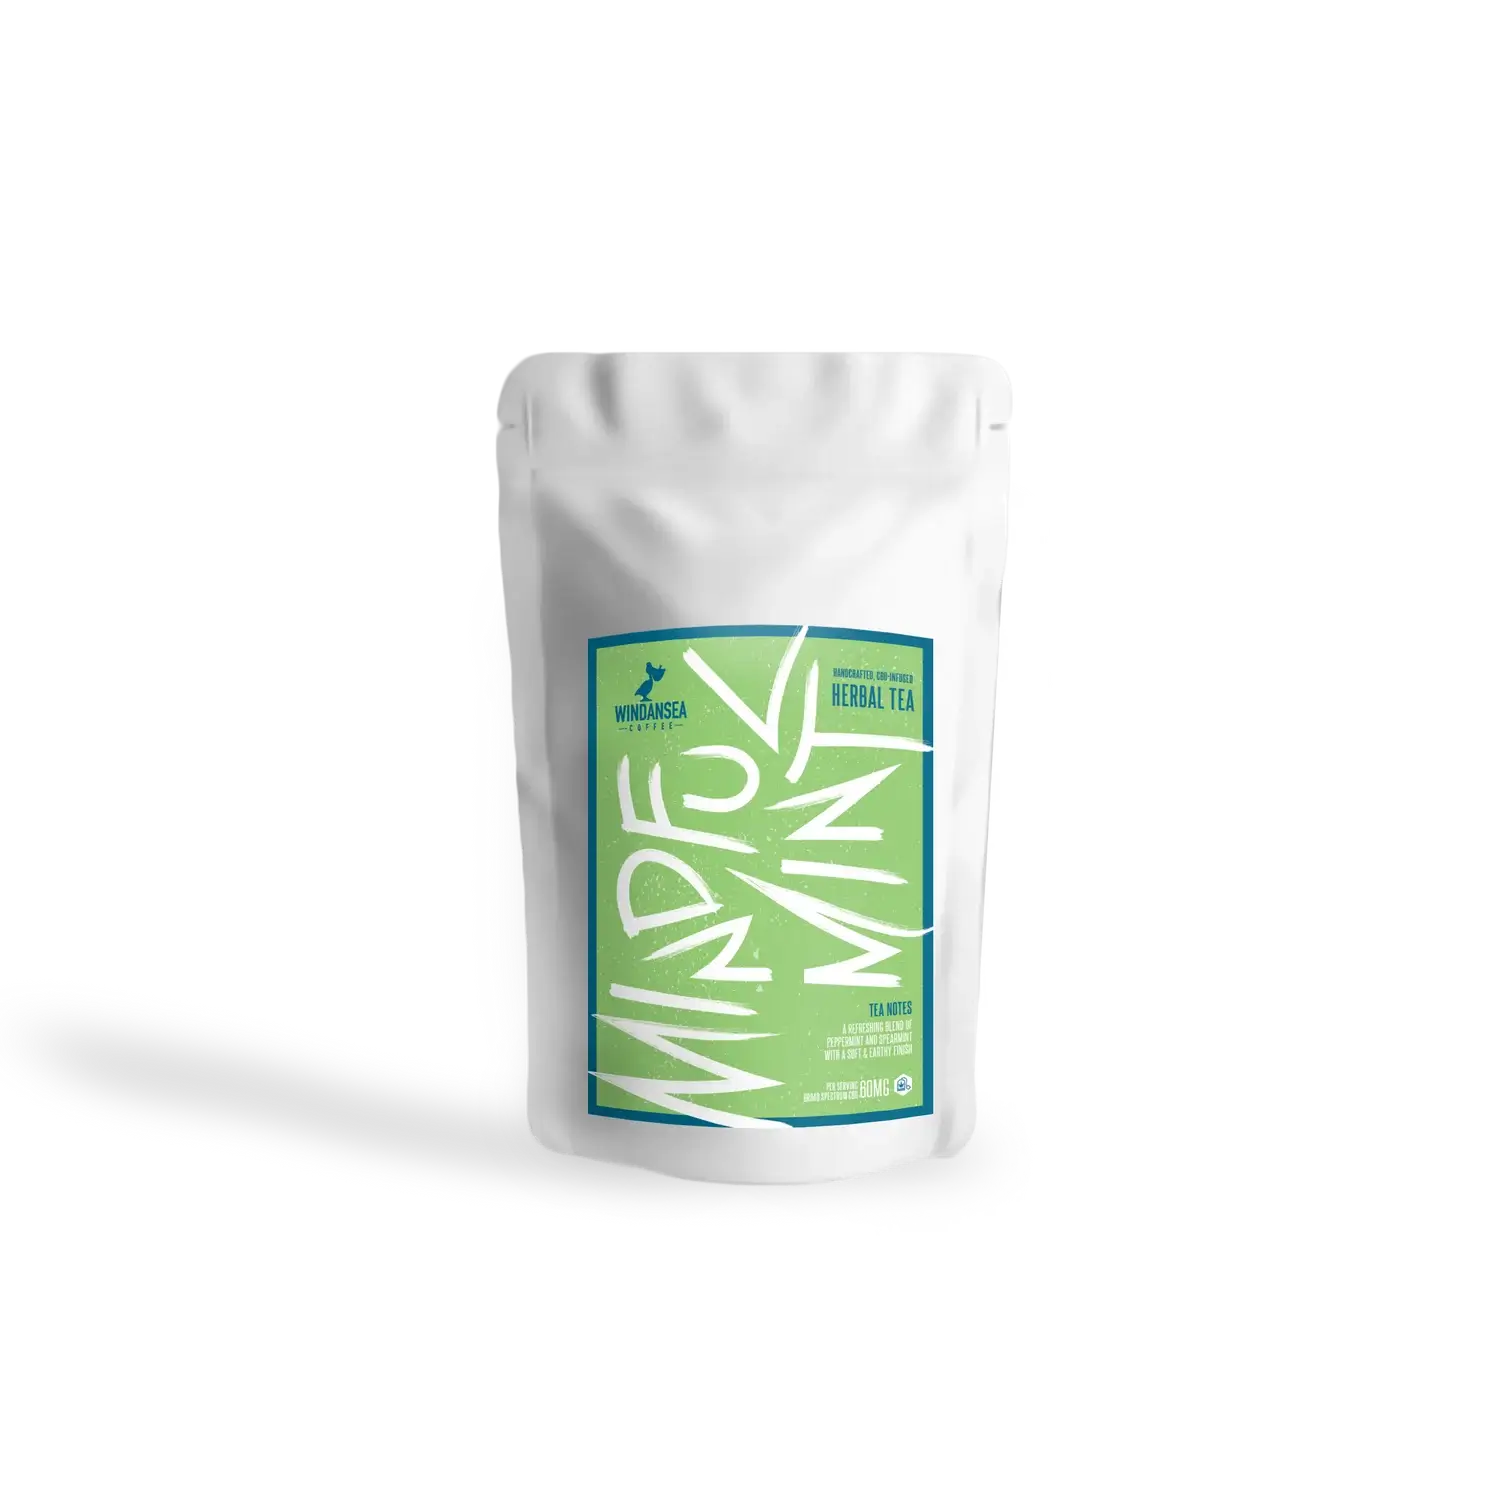 Mindful Mint |  Tea - 8pack - WindanSea Coffee